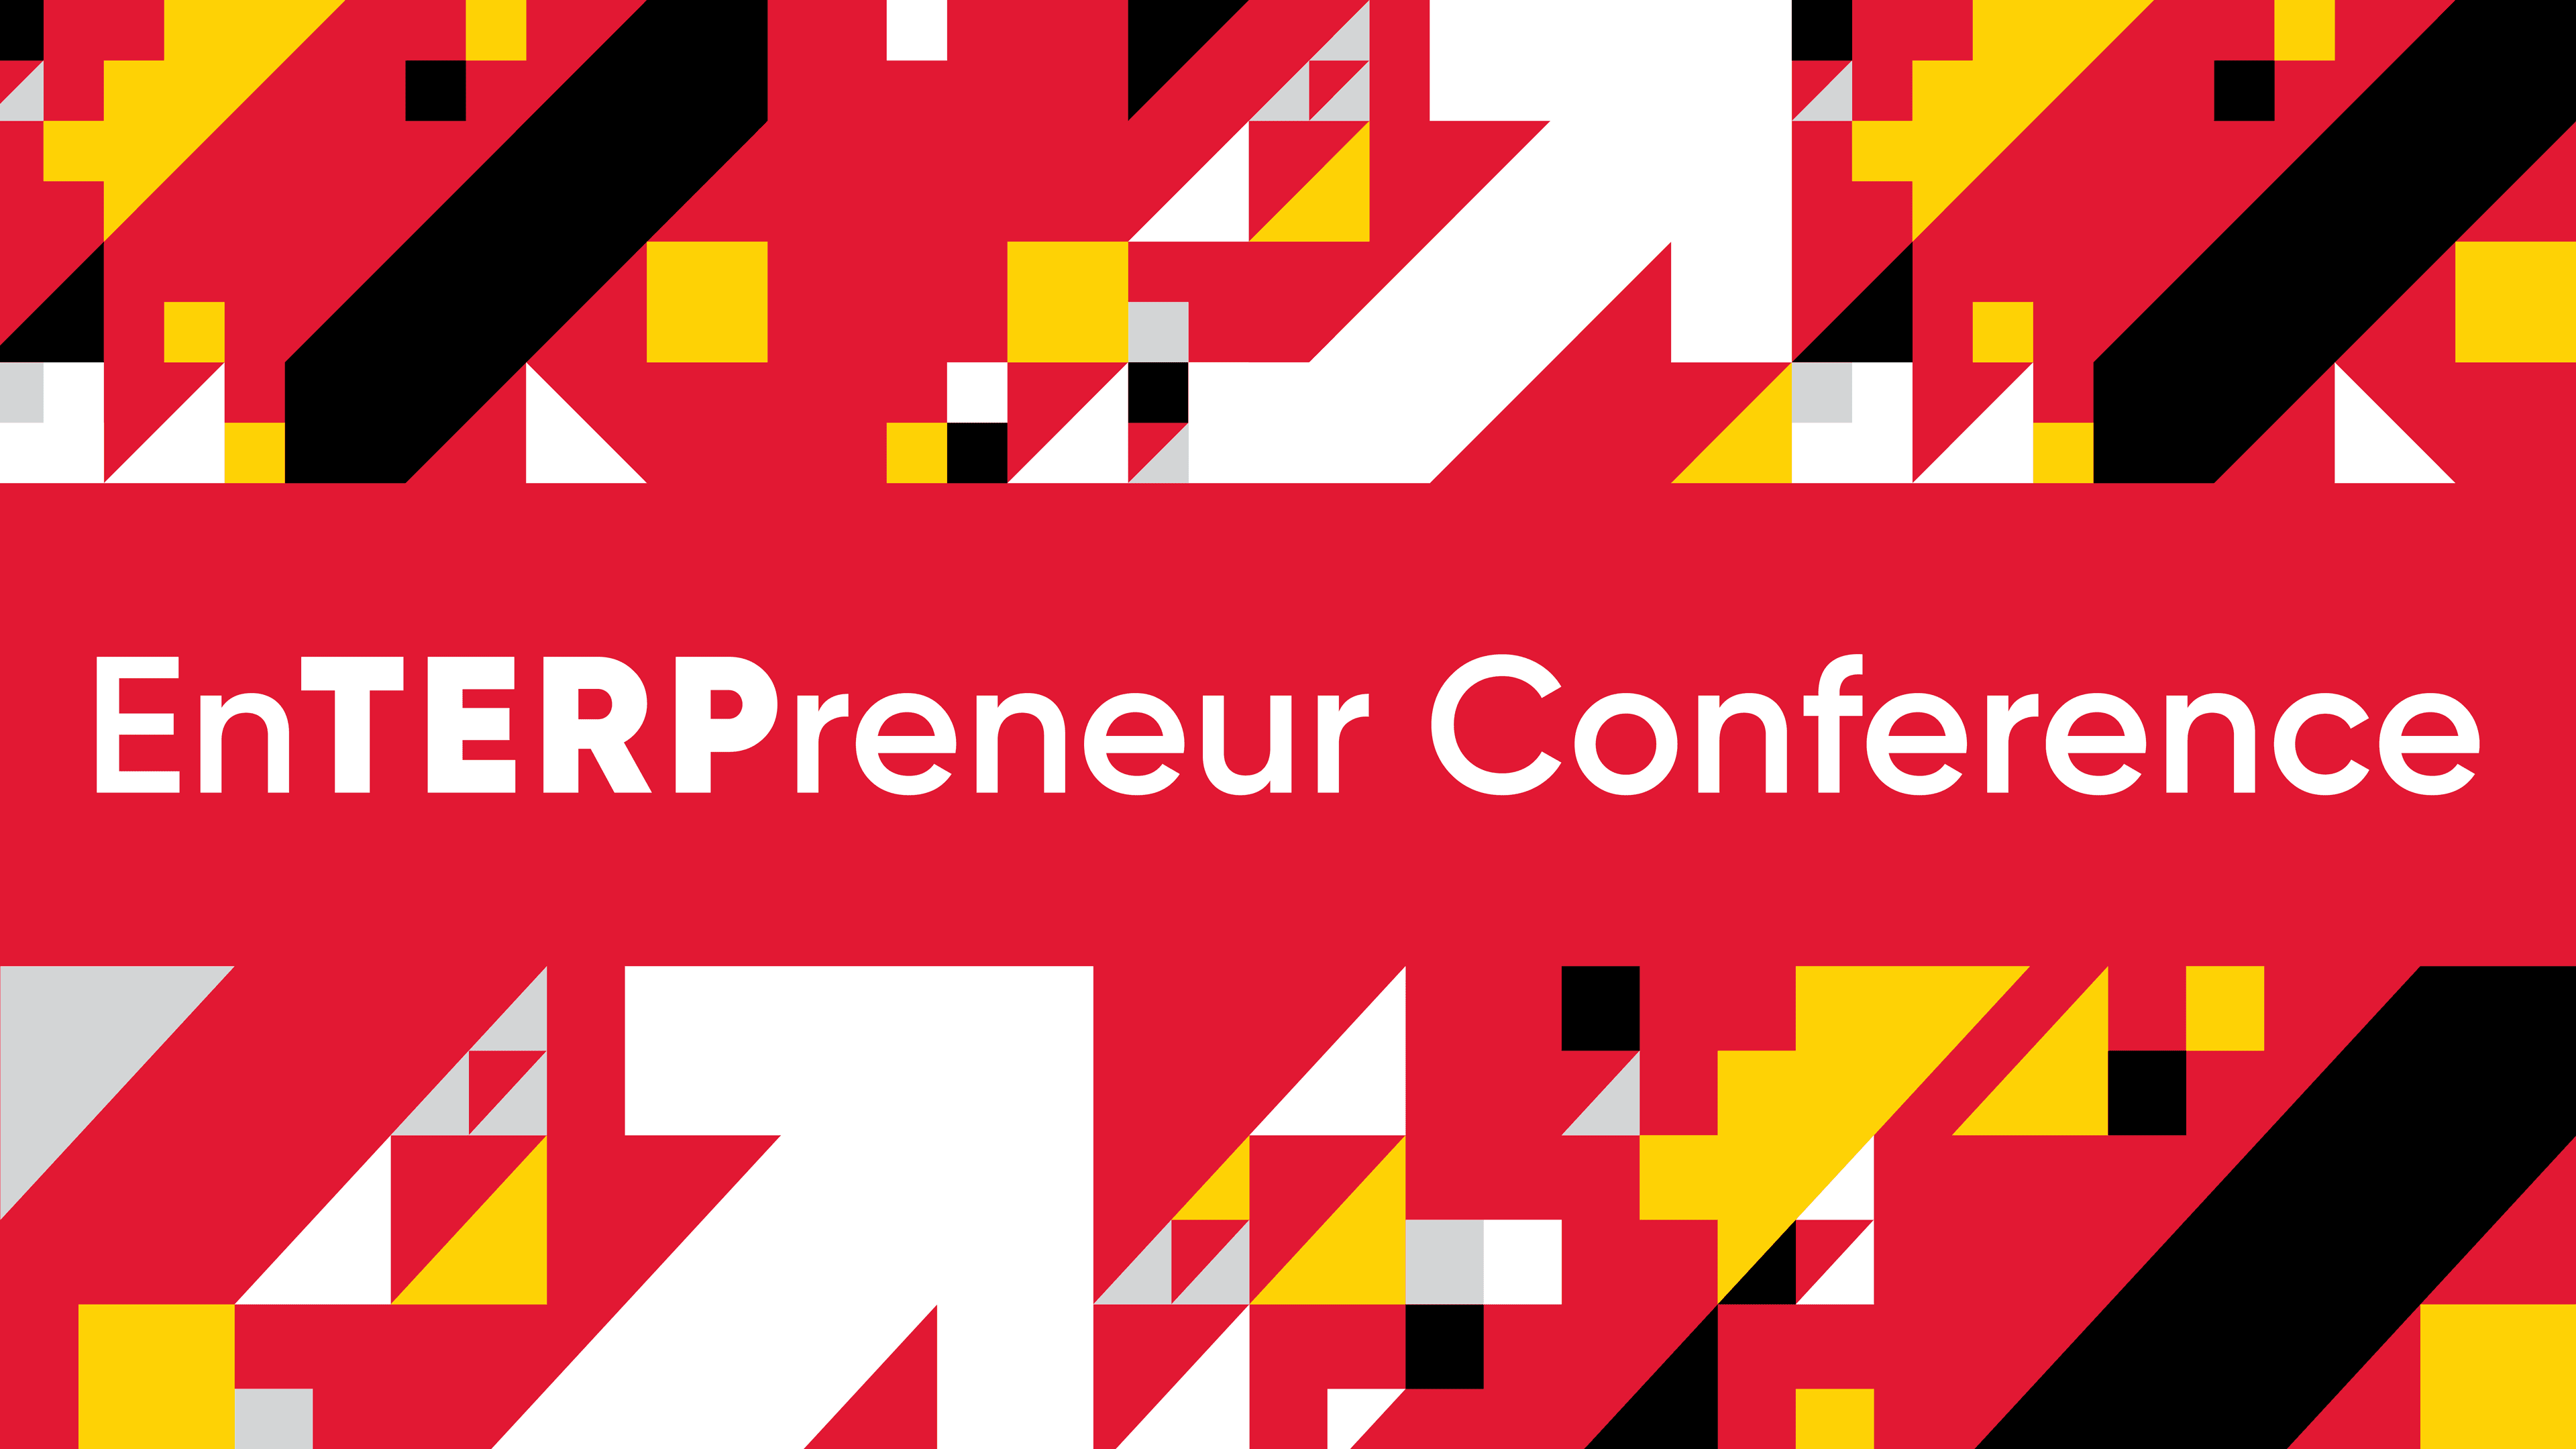 EnTERPreneur Conference logo